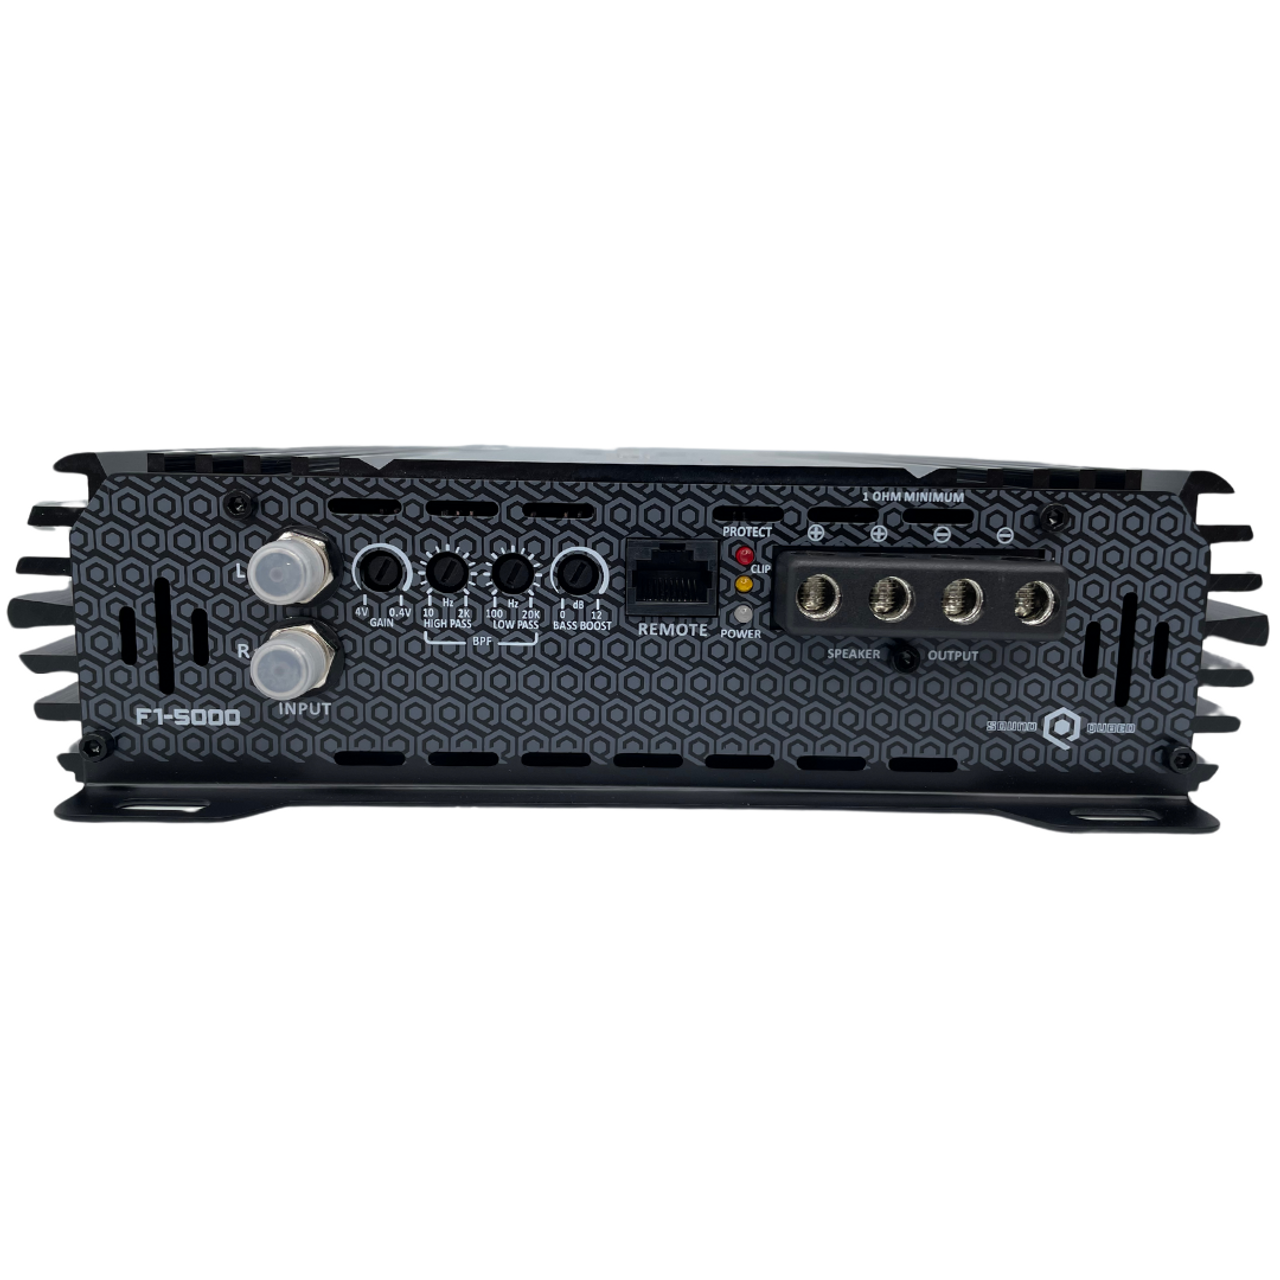 SoundQubed F1-5000 Monoblock Amplifier